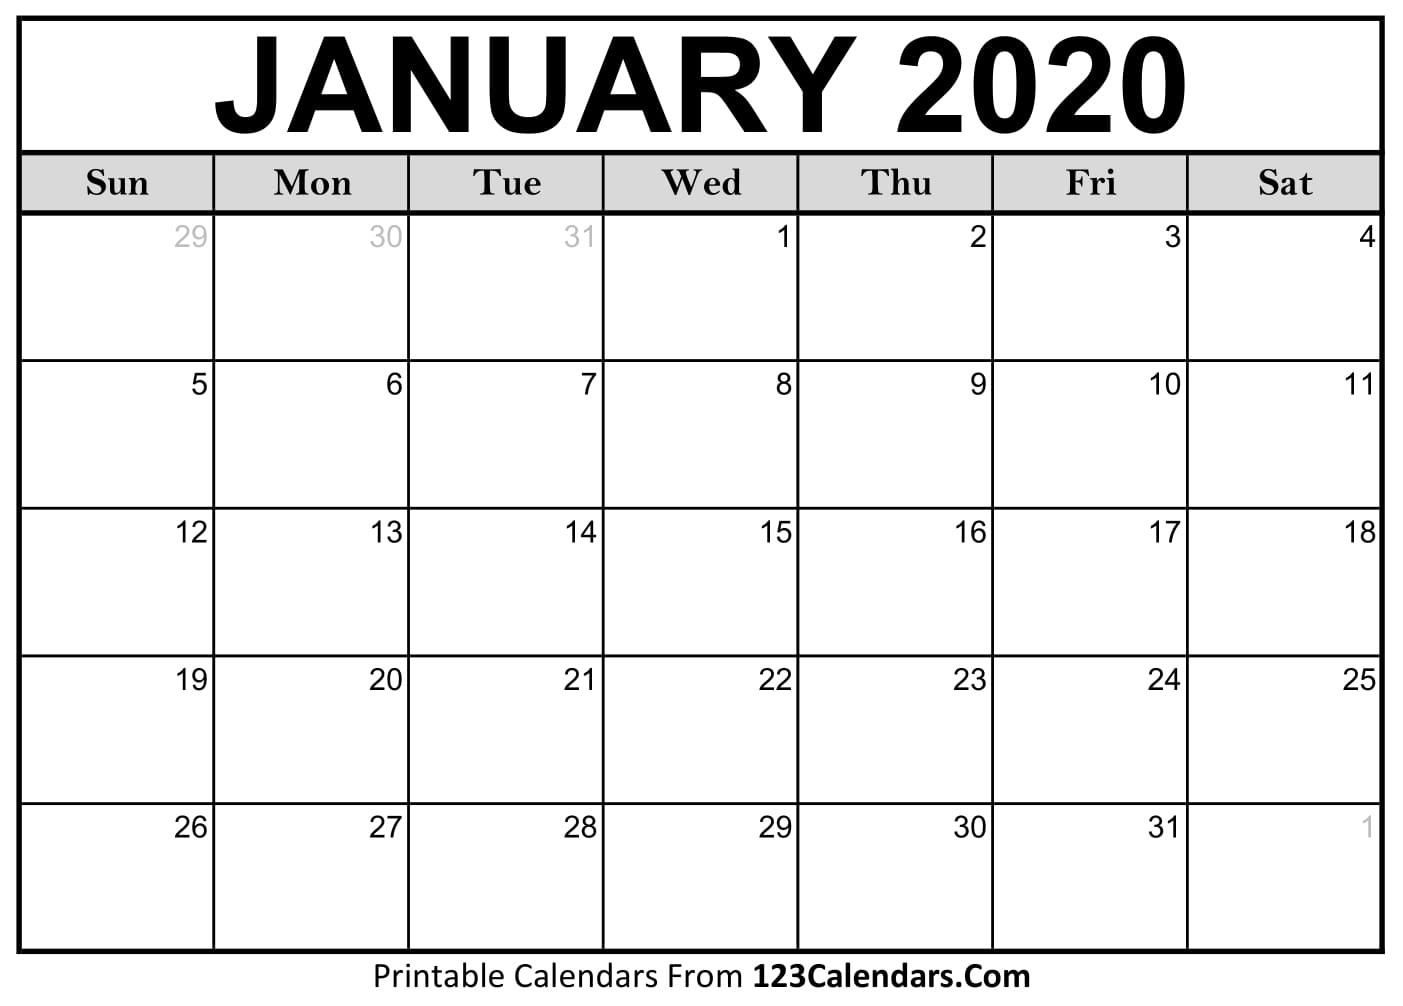 Free Printable Calendar | 123Calendars-Blank Calendar 2020 Printable Monthly